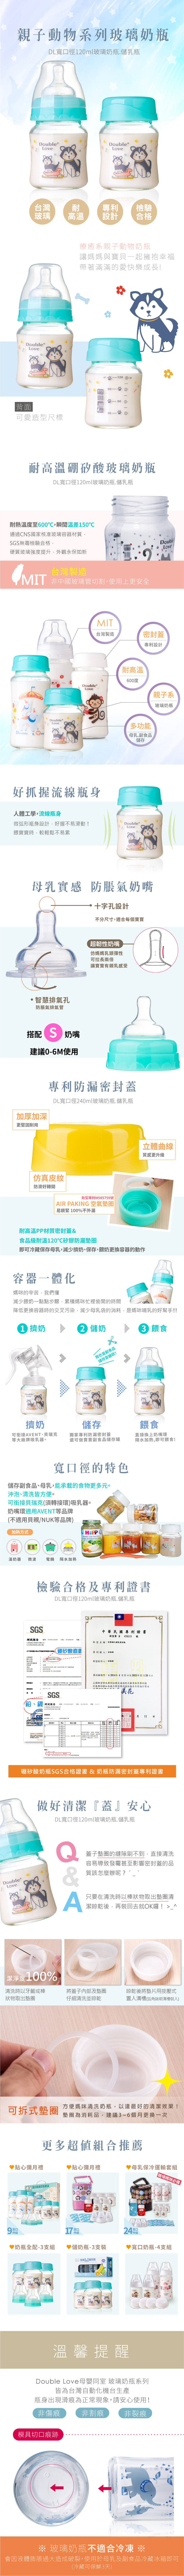 Double Love台灣 雙蓋玻璃奶瓶寬口徑120ML奶瓶/母乳儲奶瓶 銜接AVENT及貝瑞克吸乳器【EA0050】